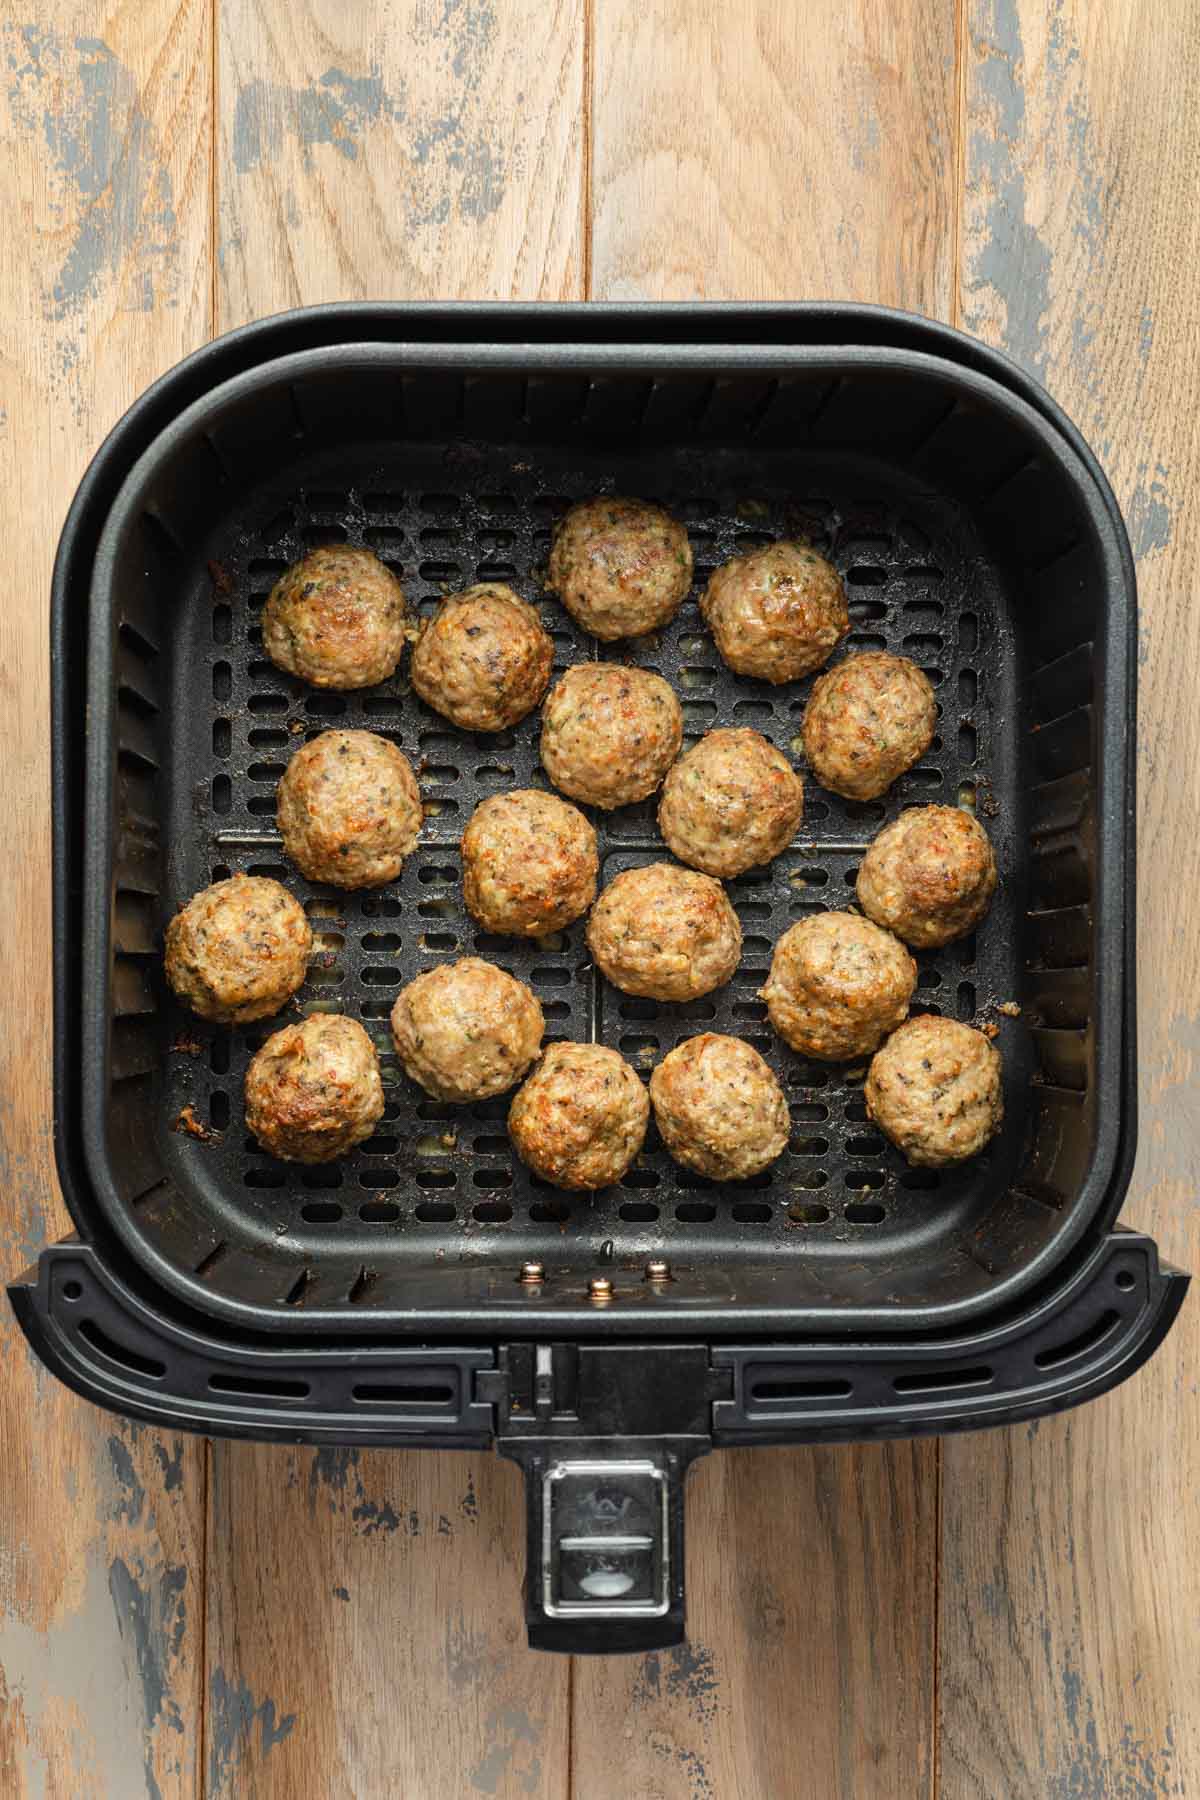 Cooked turkey meatballs in an air fryer basket.